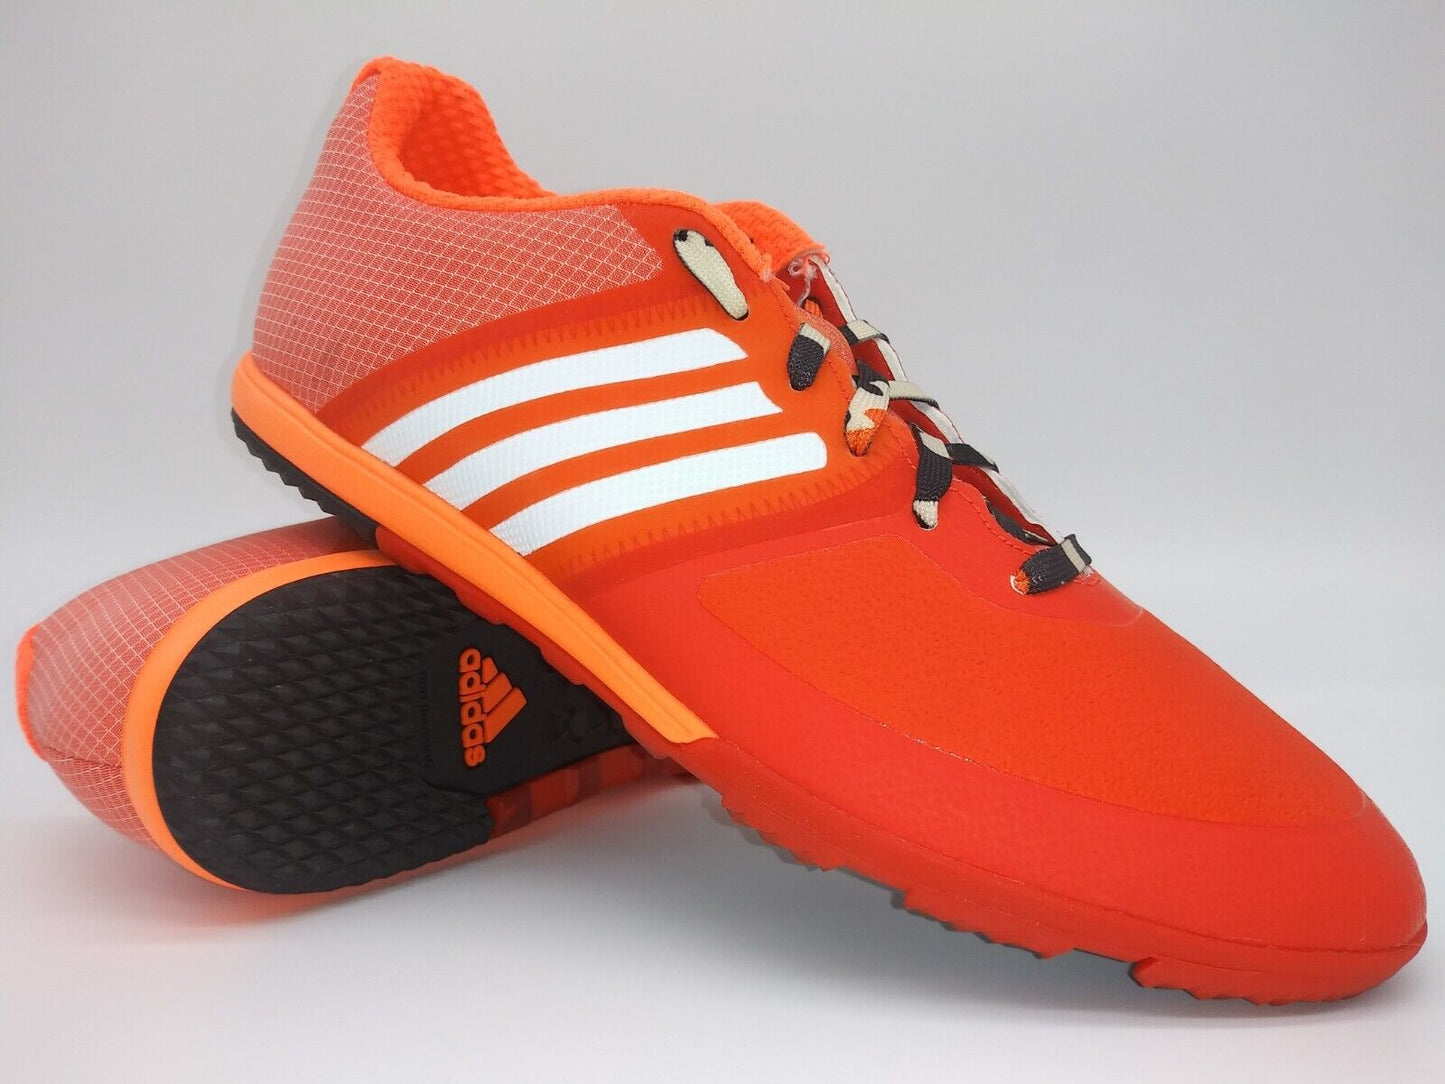 Adidas ACE 15.1 CG Orange